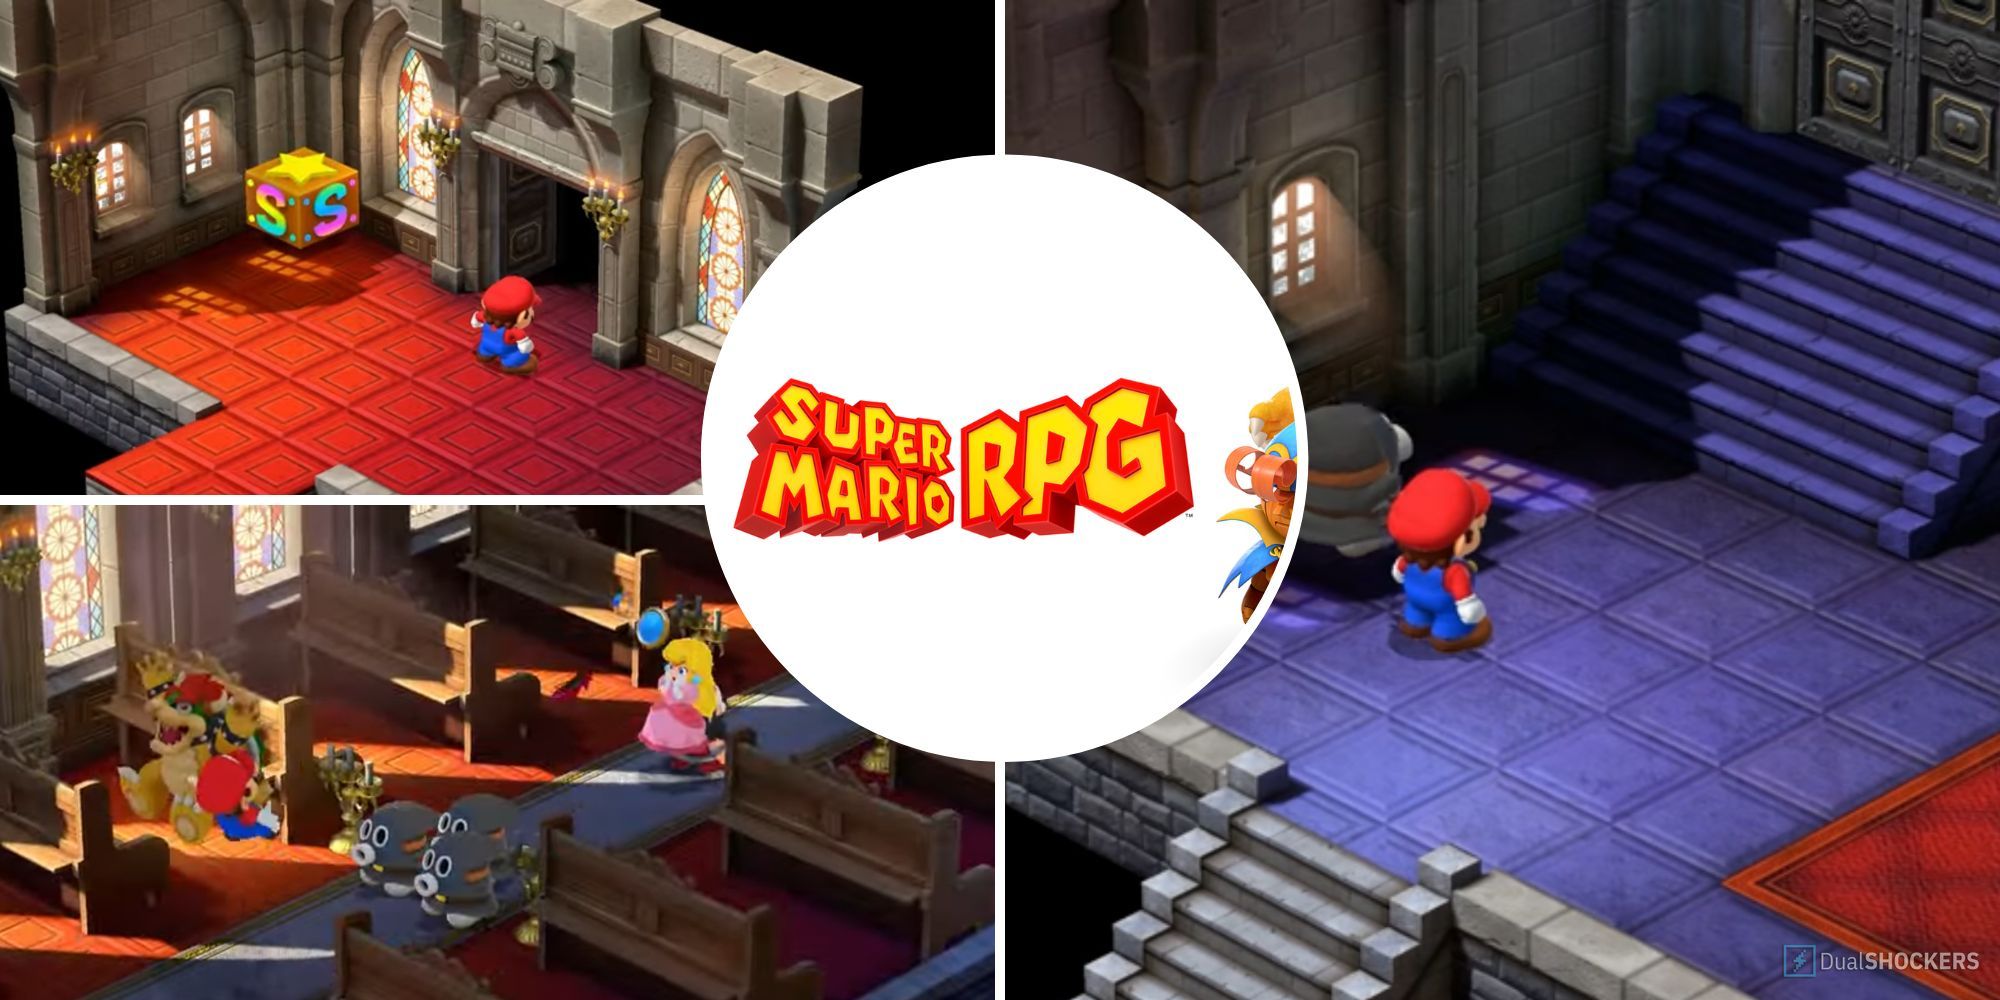 Super Mario RPG - Marrymore Church Doors Split Image